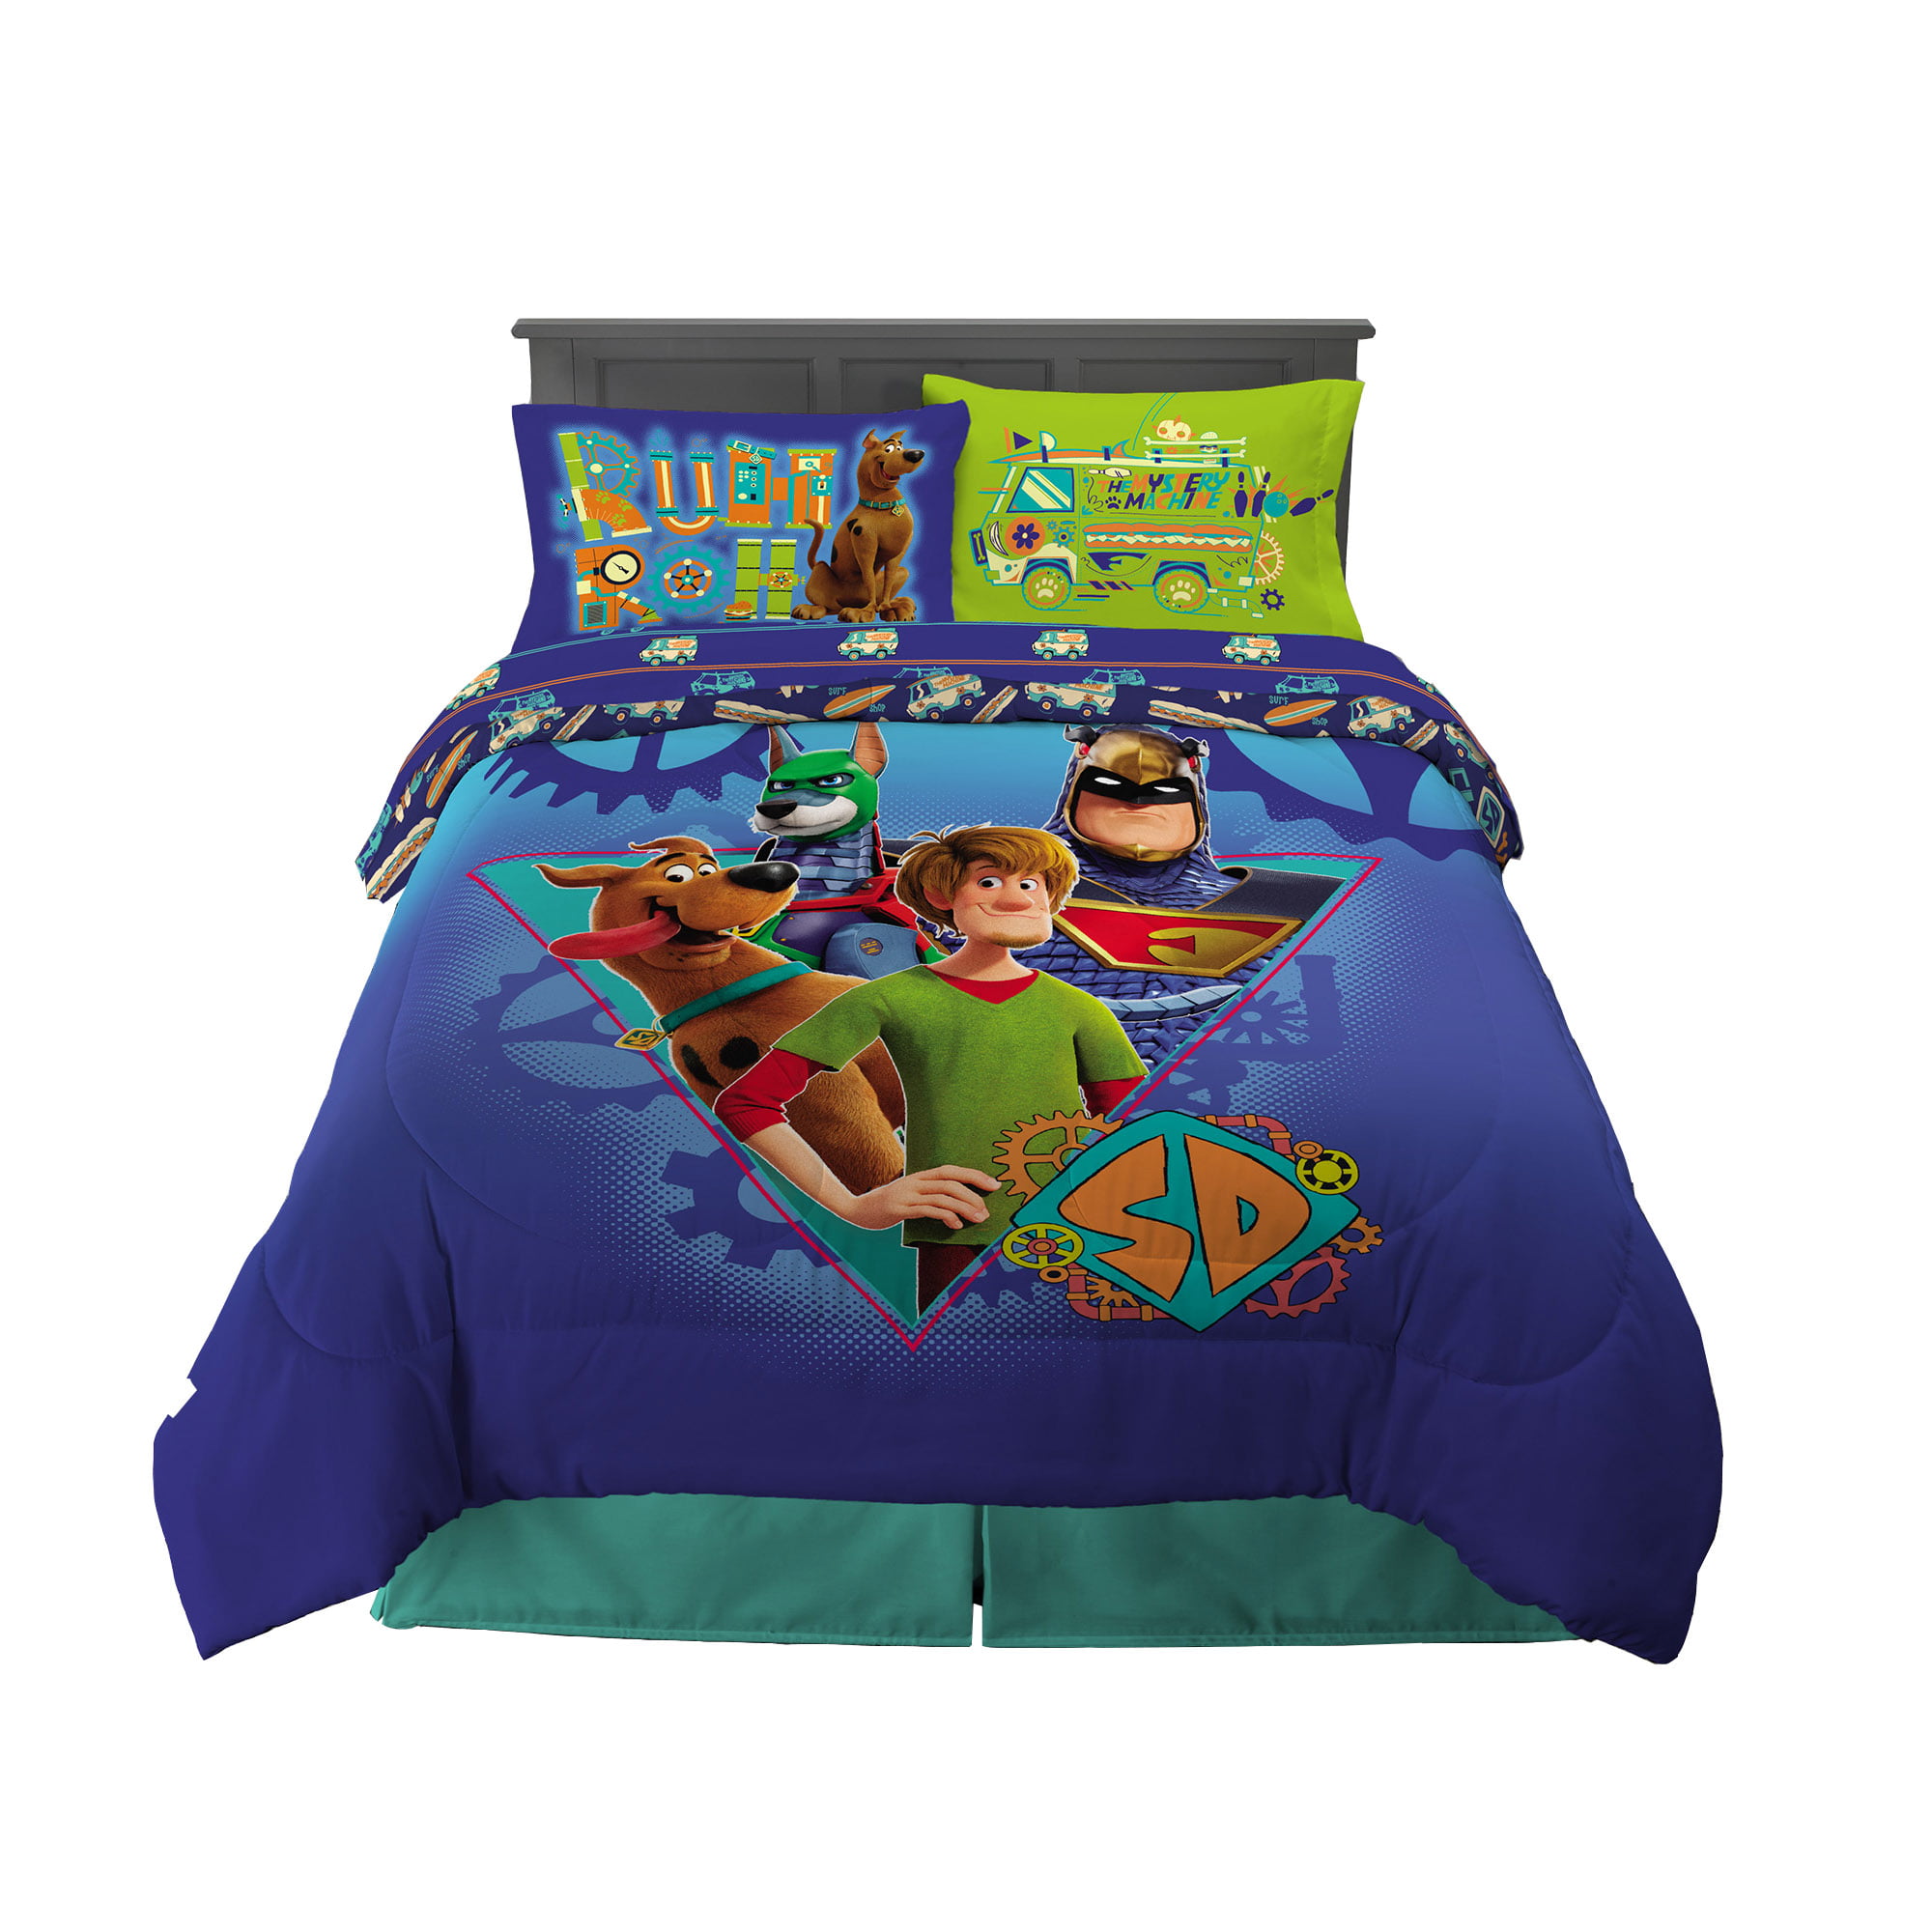 Scooby Doo StandardQueen Sized Pillowcase